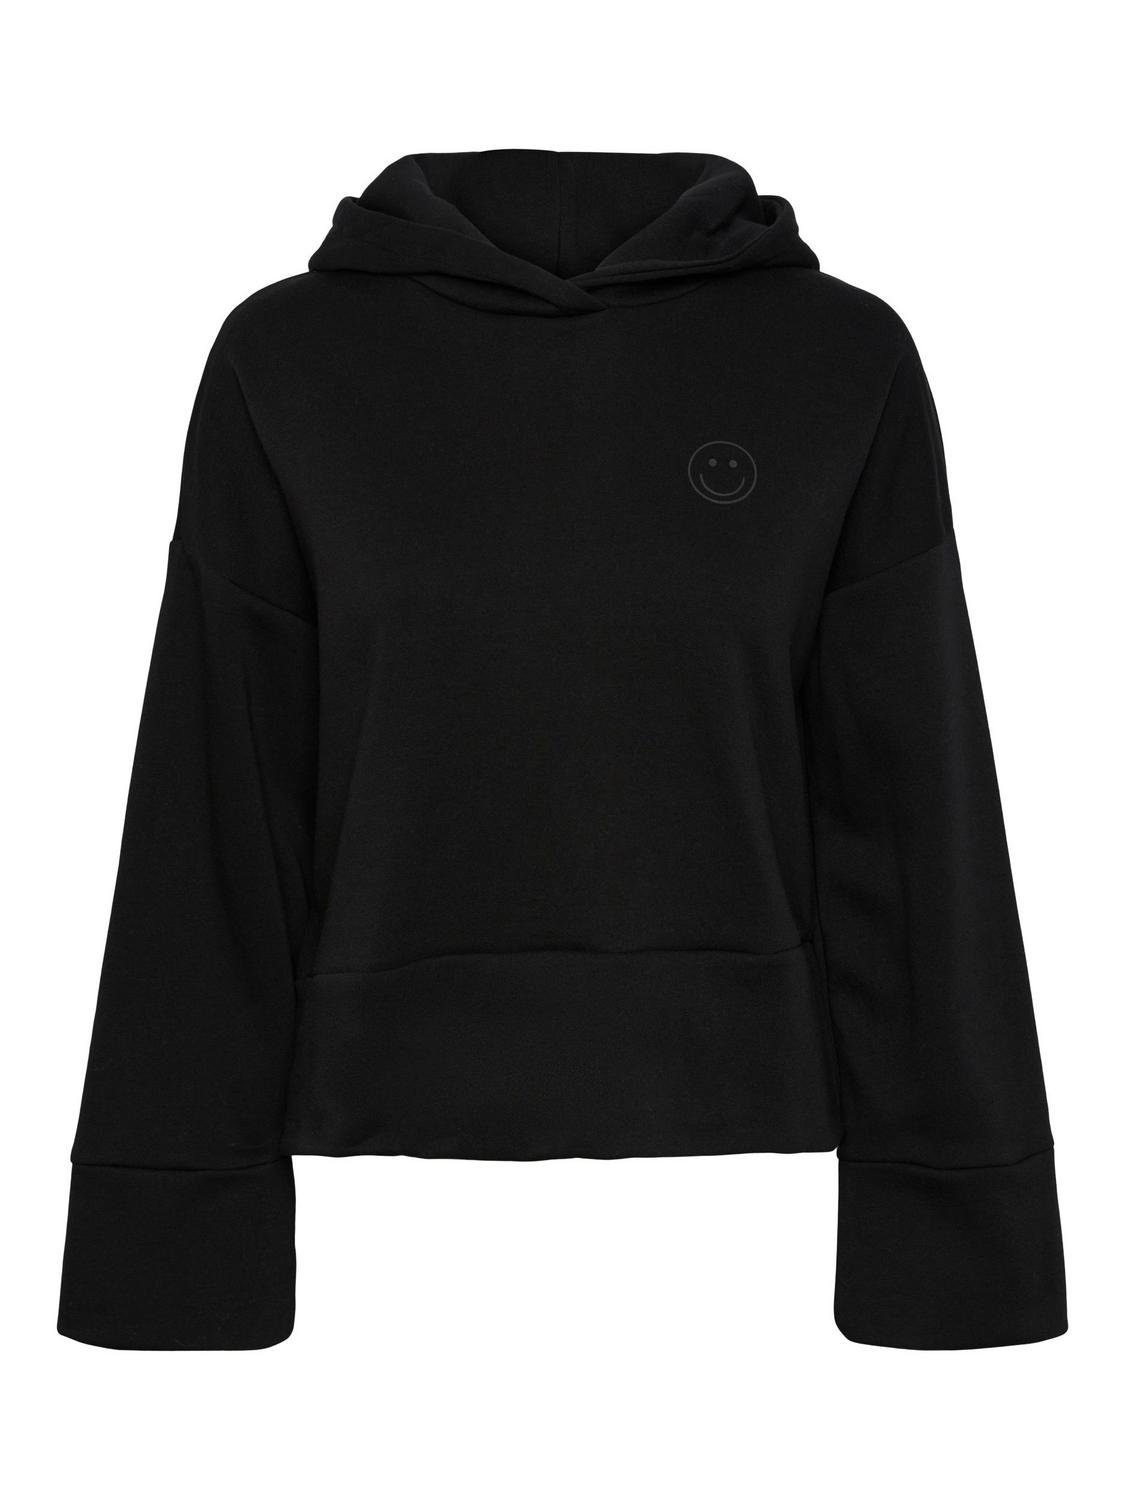 HOODIE BC Sweatshirt PCMAKENNA pieces sequince Black/Black LS